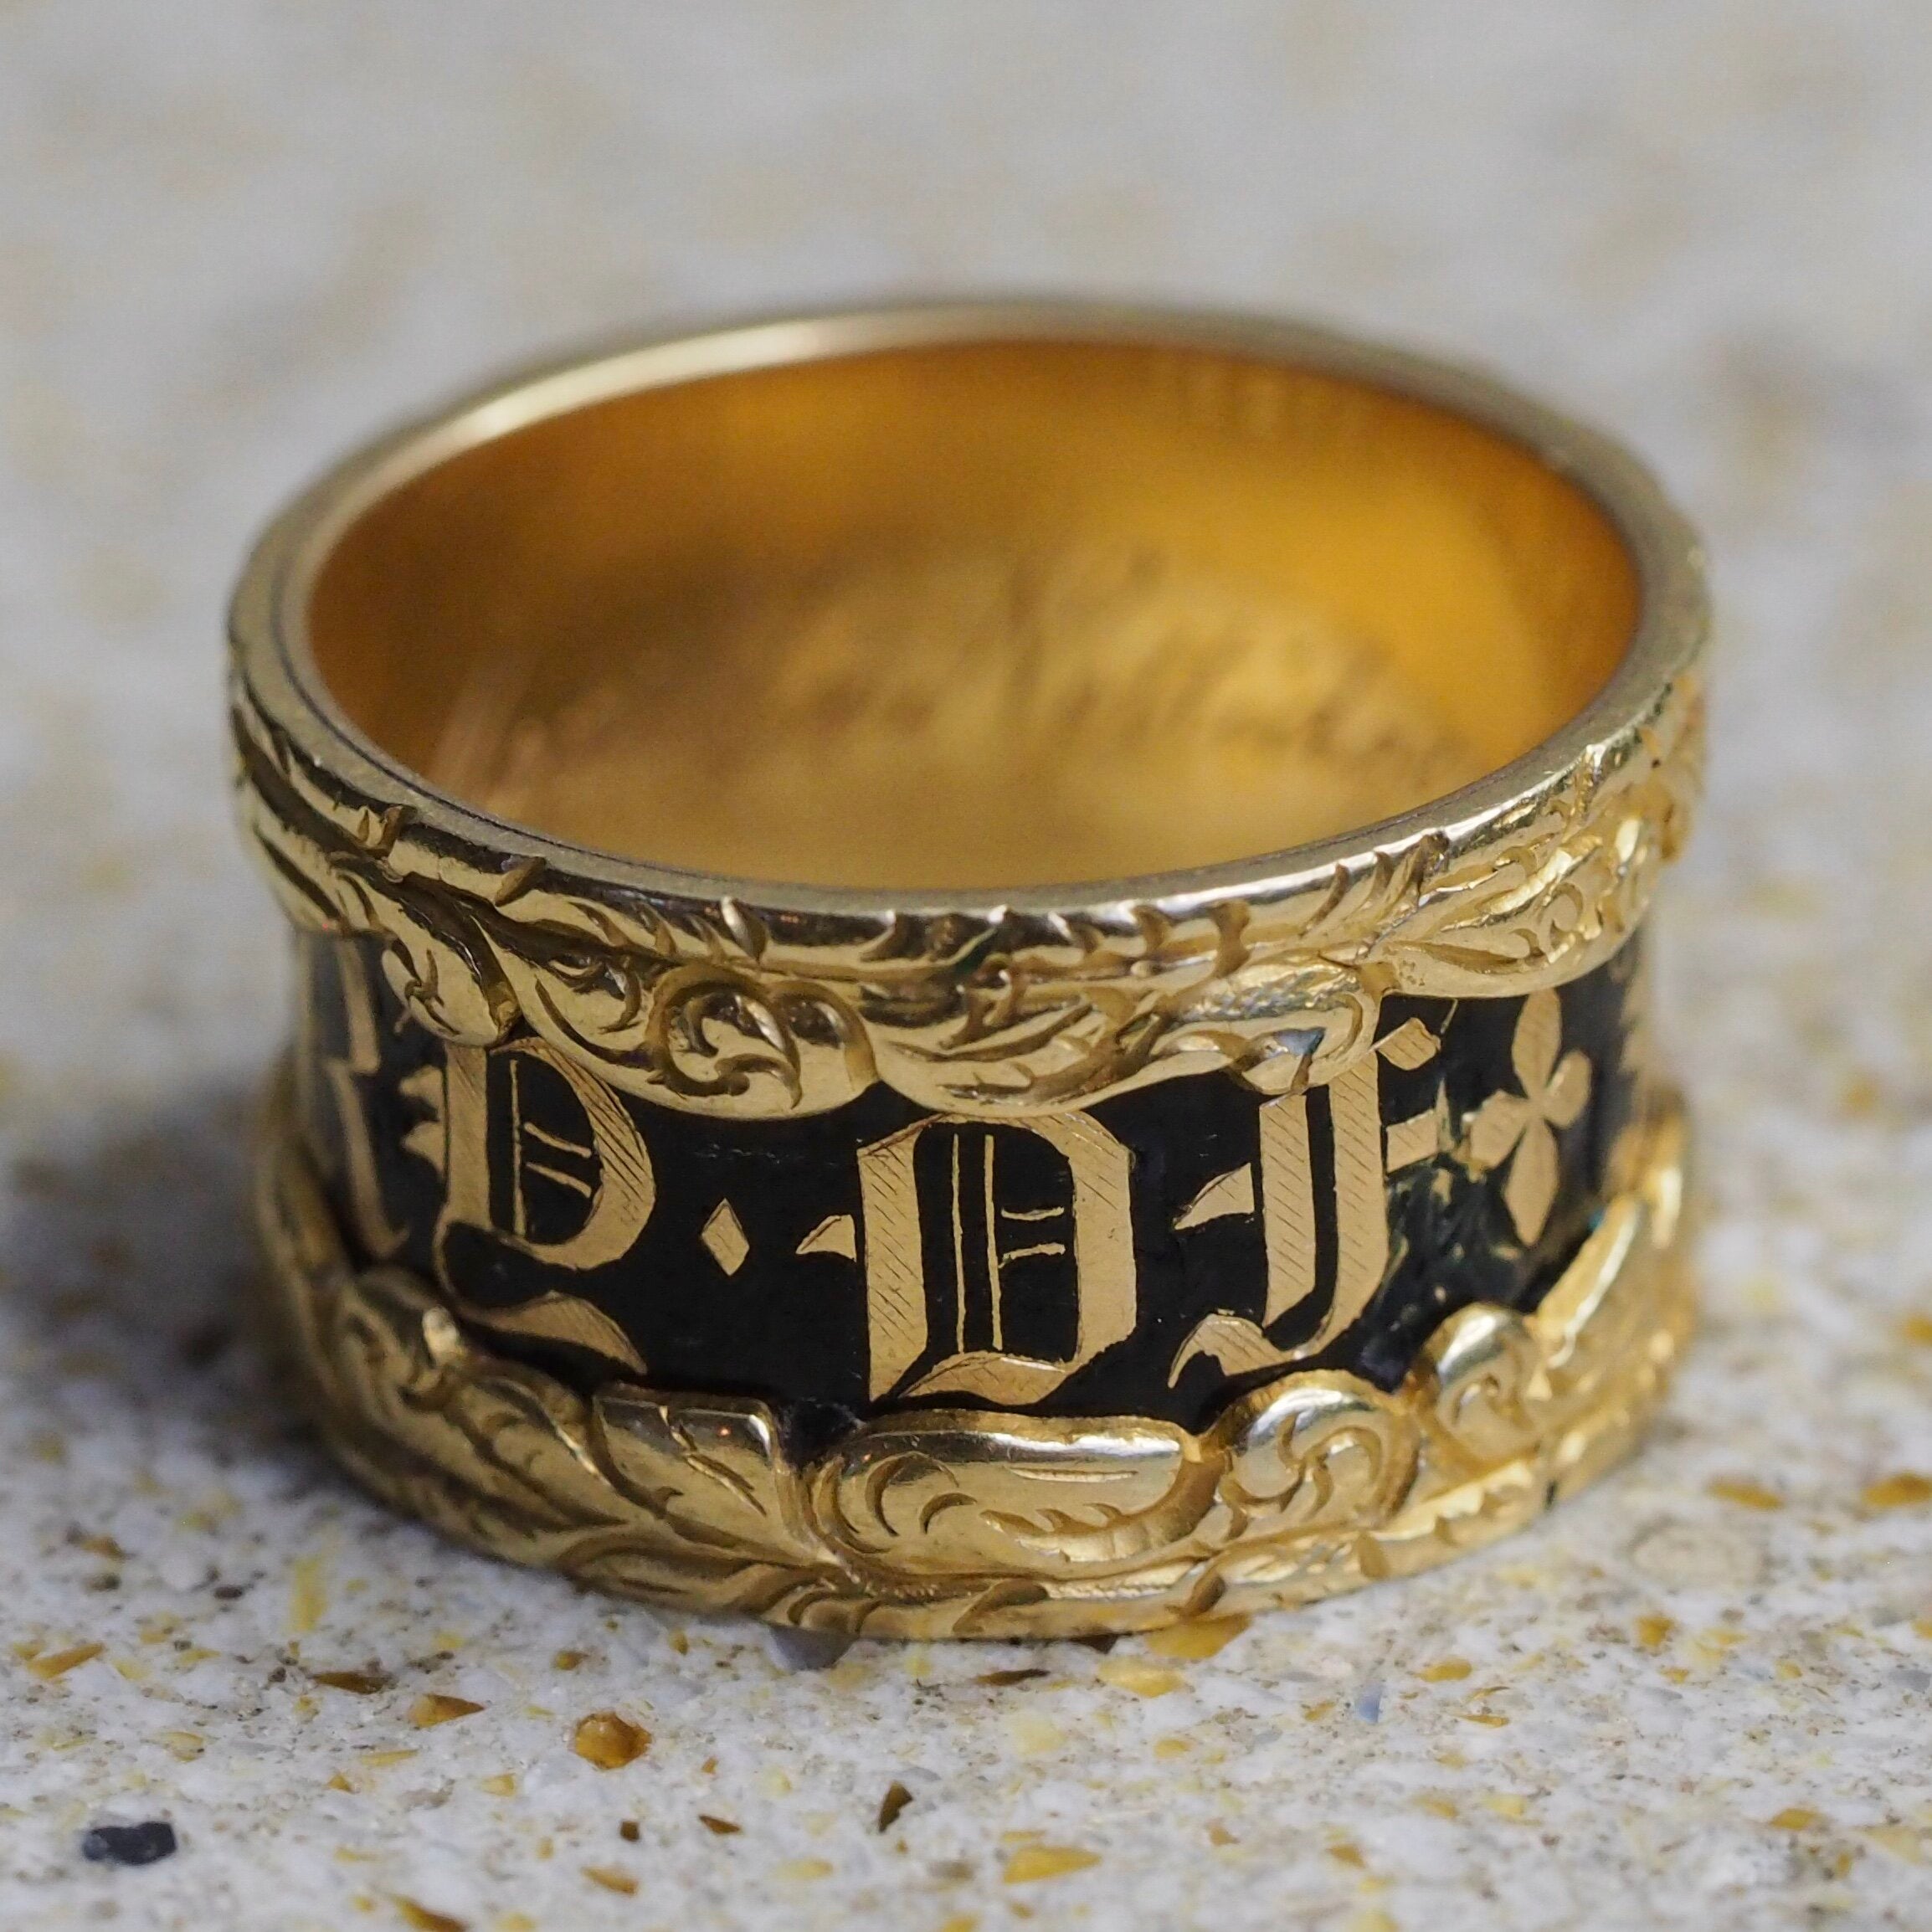 Antique c. 1825 18k Gold and Black Enamel Mourning Ring